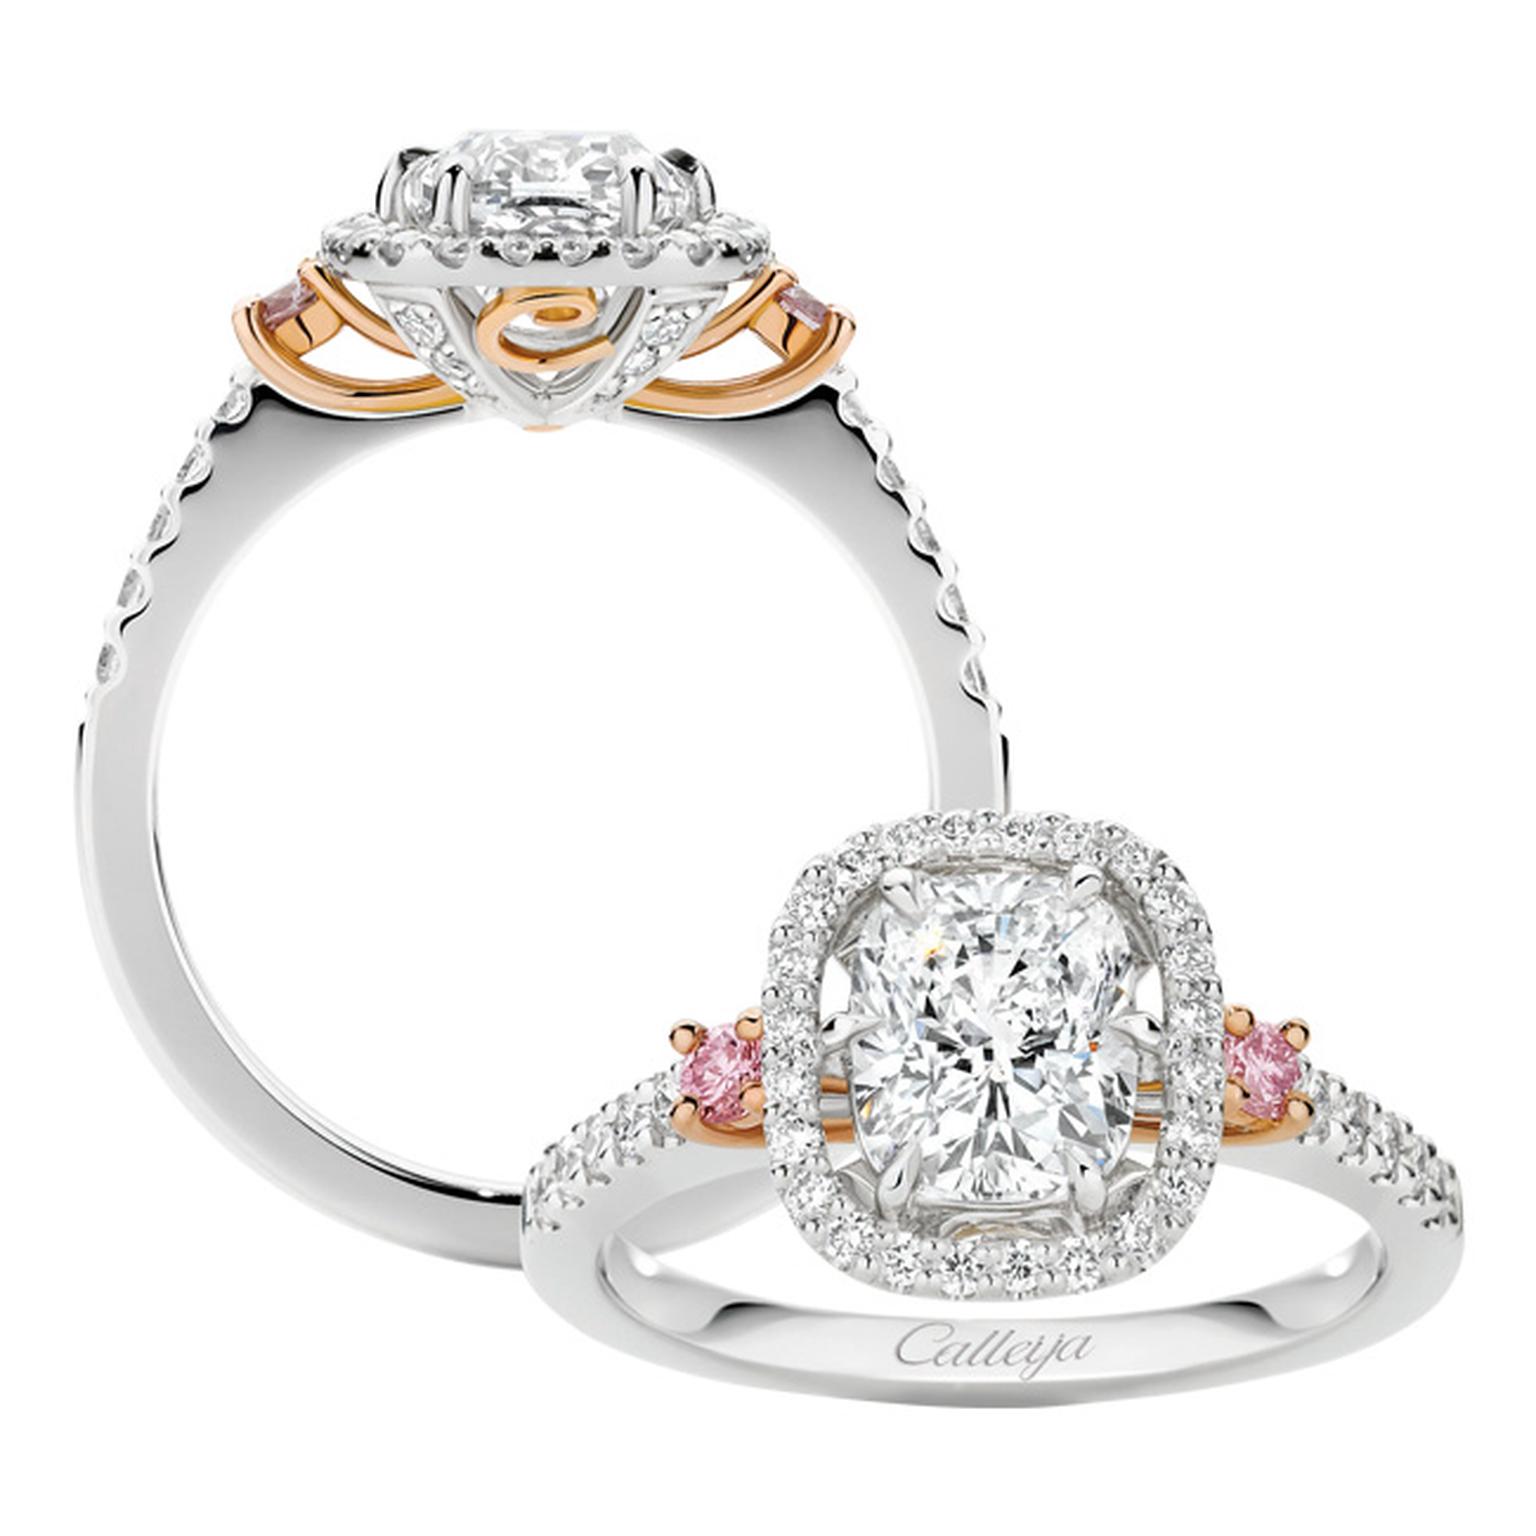 Calleija Glacier white and pink diamond ring_20140318_Main